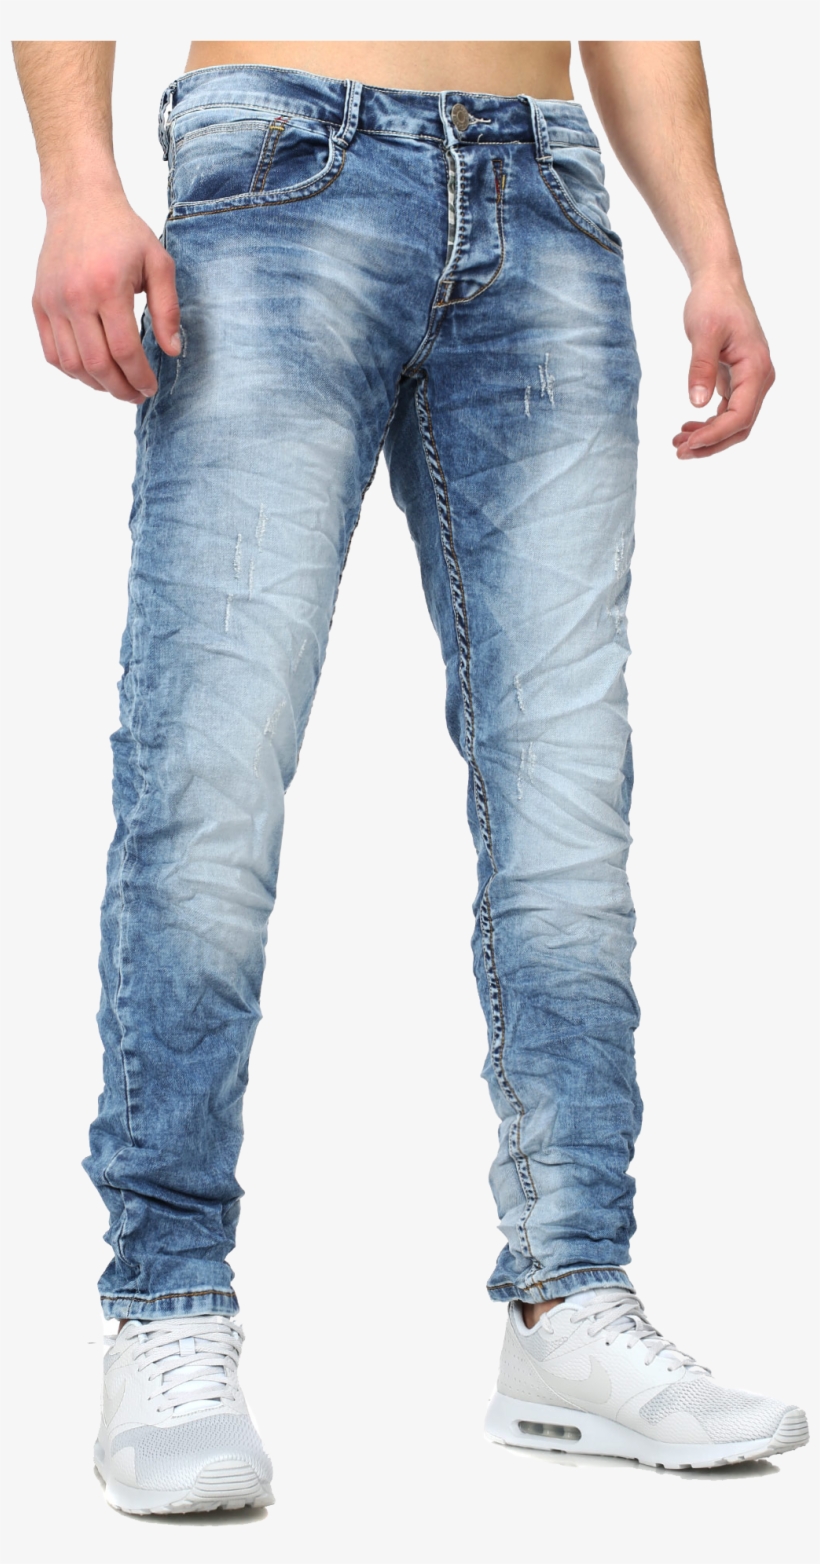 Men's Denim Jeans Washes - Free Transparent PNG Download - PNGkey